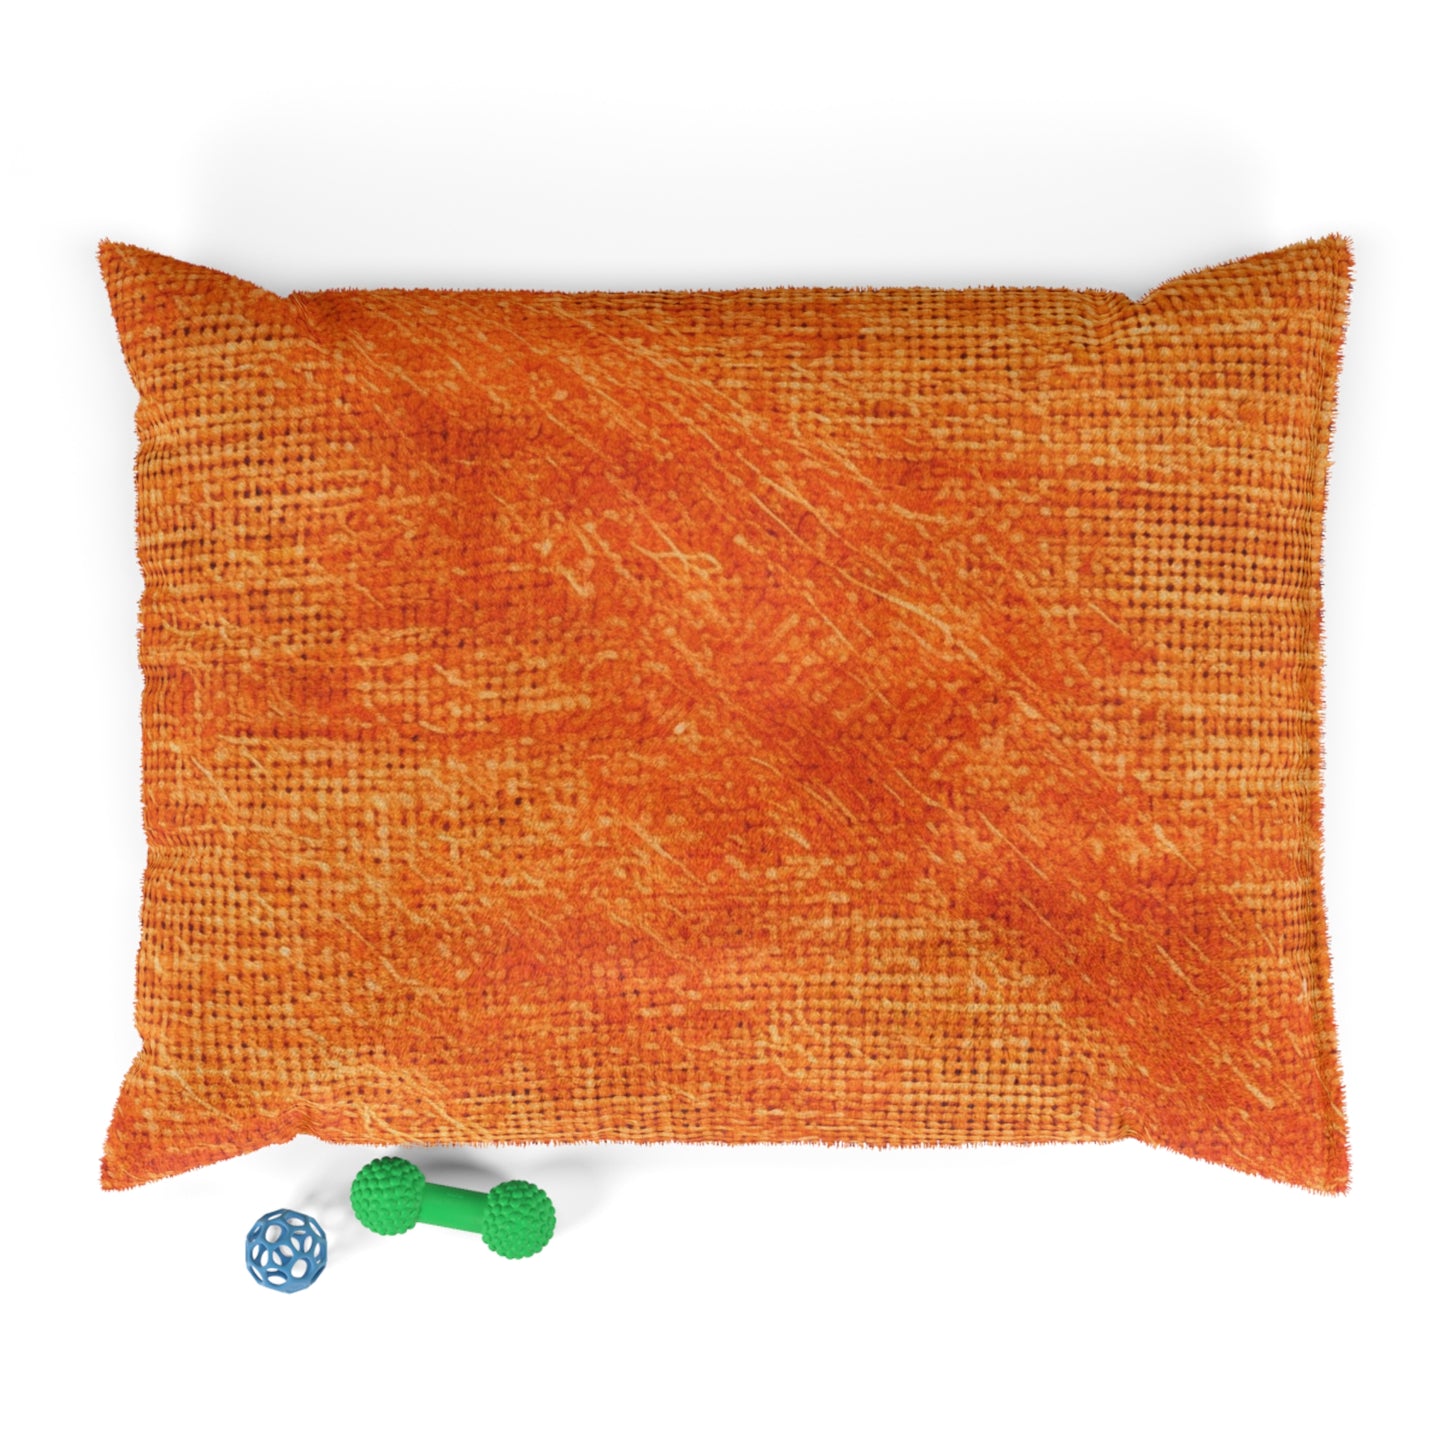 Burnt Orange/Rust: Denim-Inspired Autumn Fall Color Fabric - Dog & Pet Bed